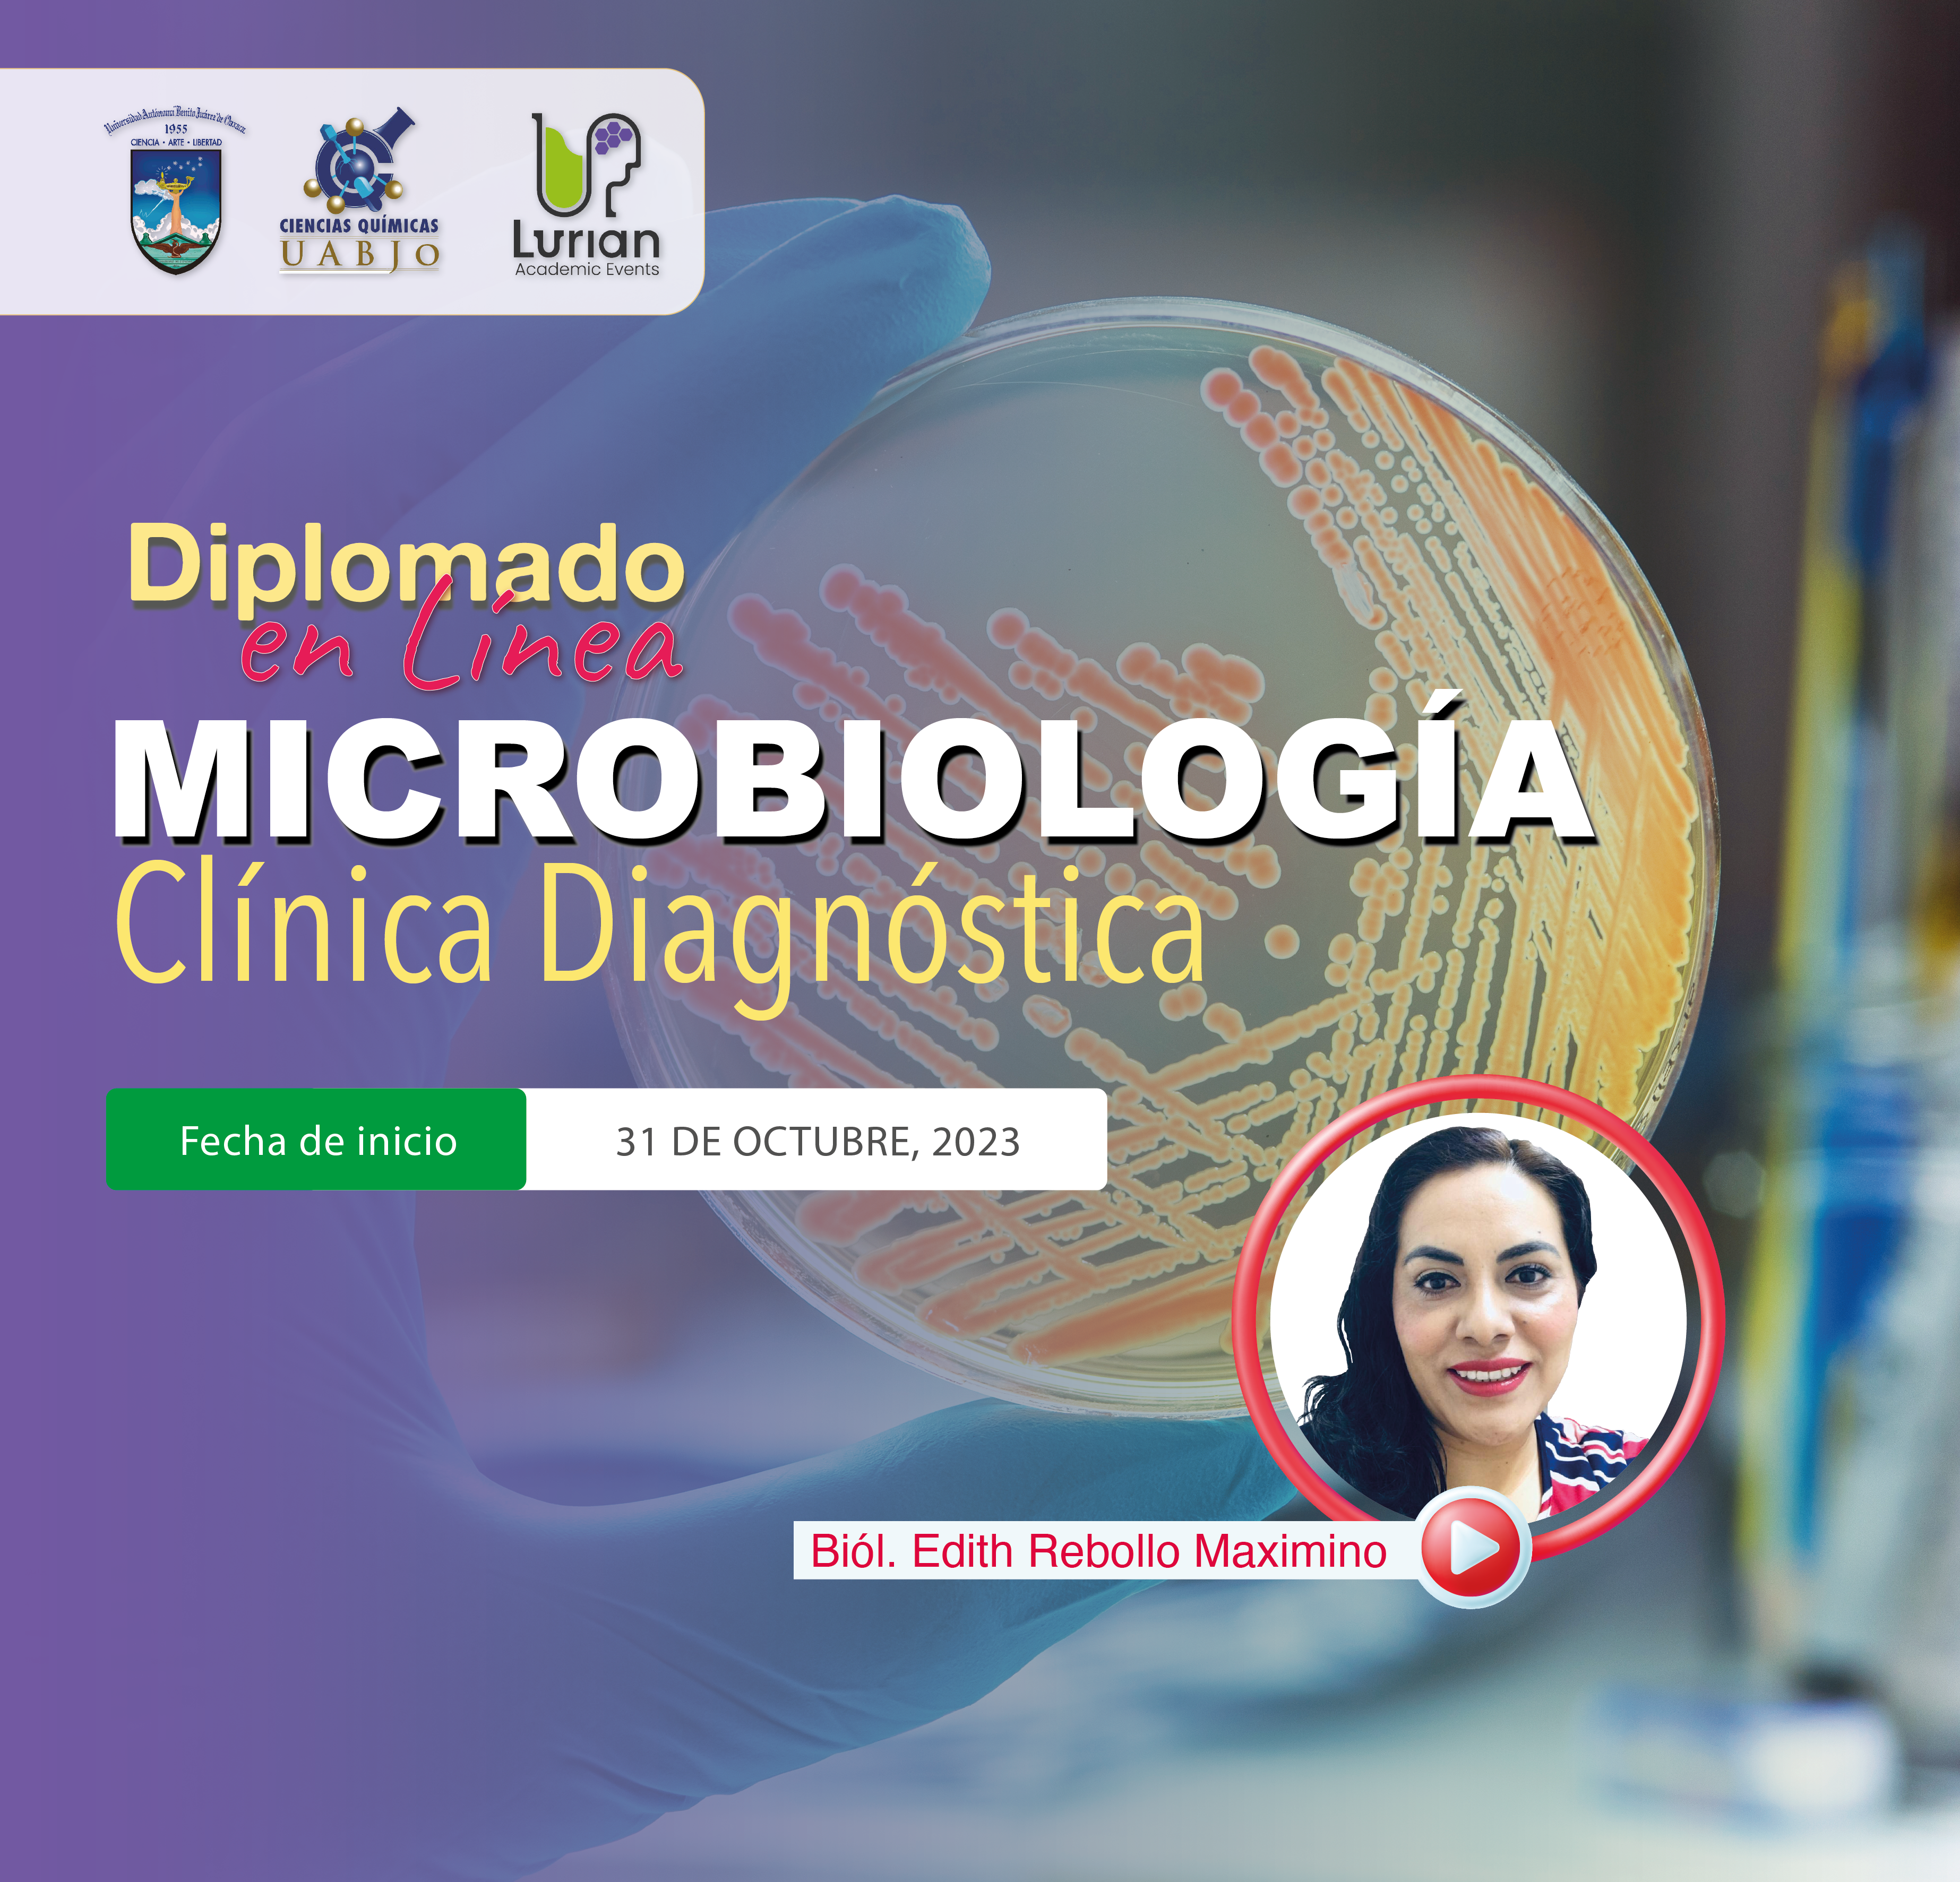 Diplomado en Linea | Microbiologia Clinica Diagnostica 2023